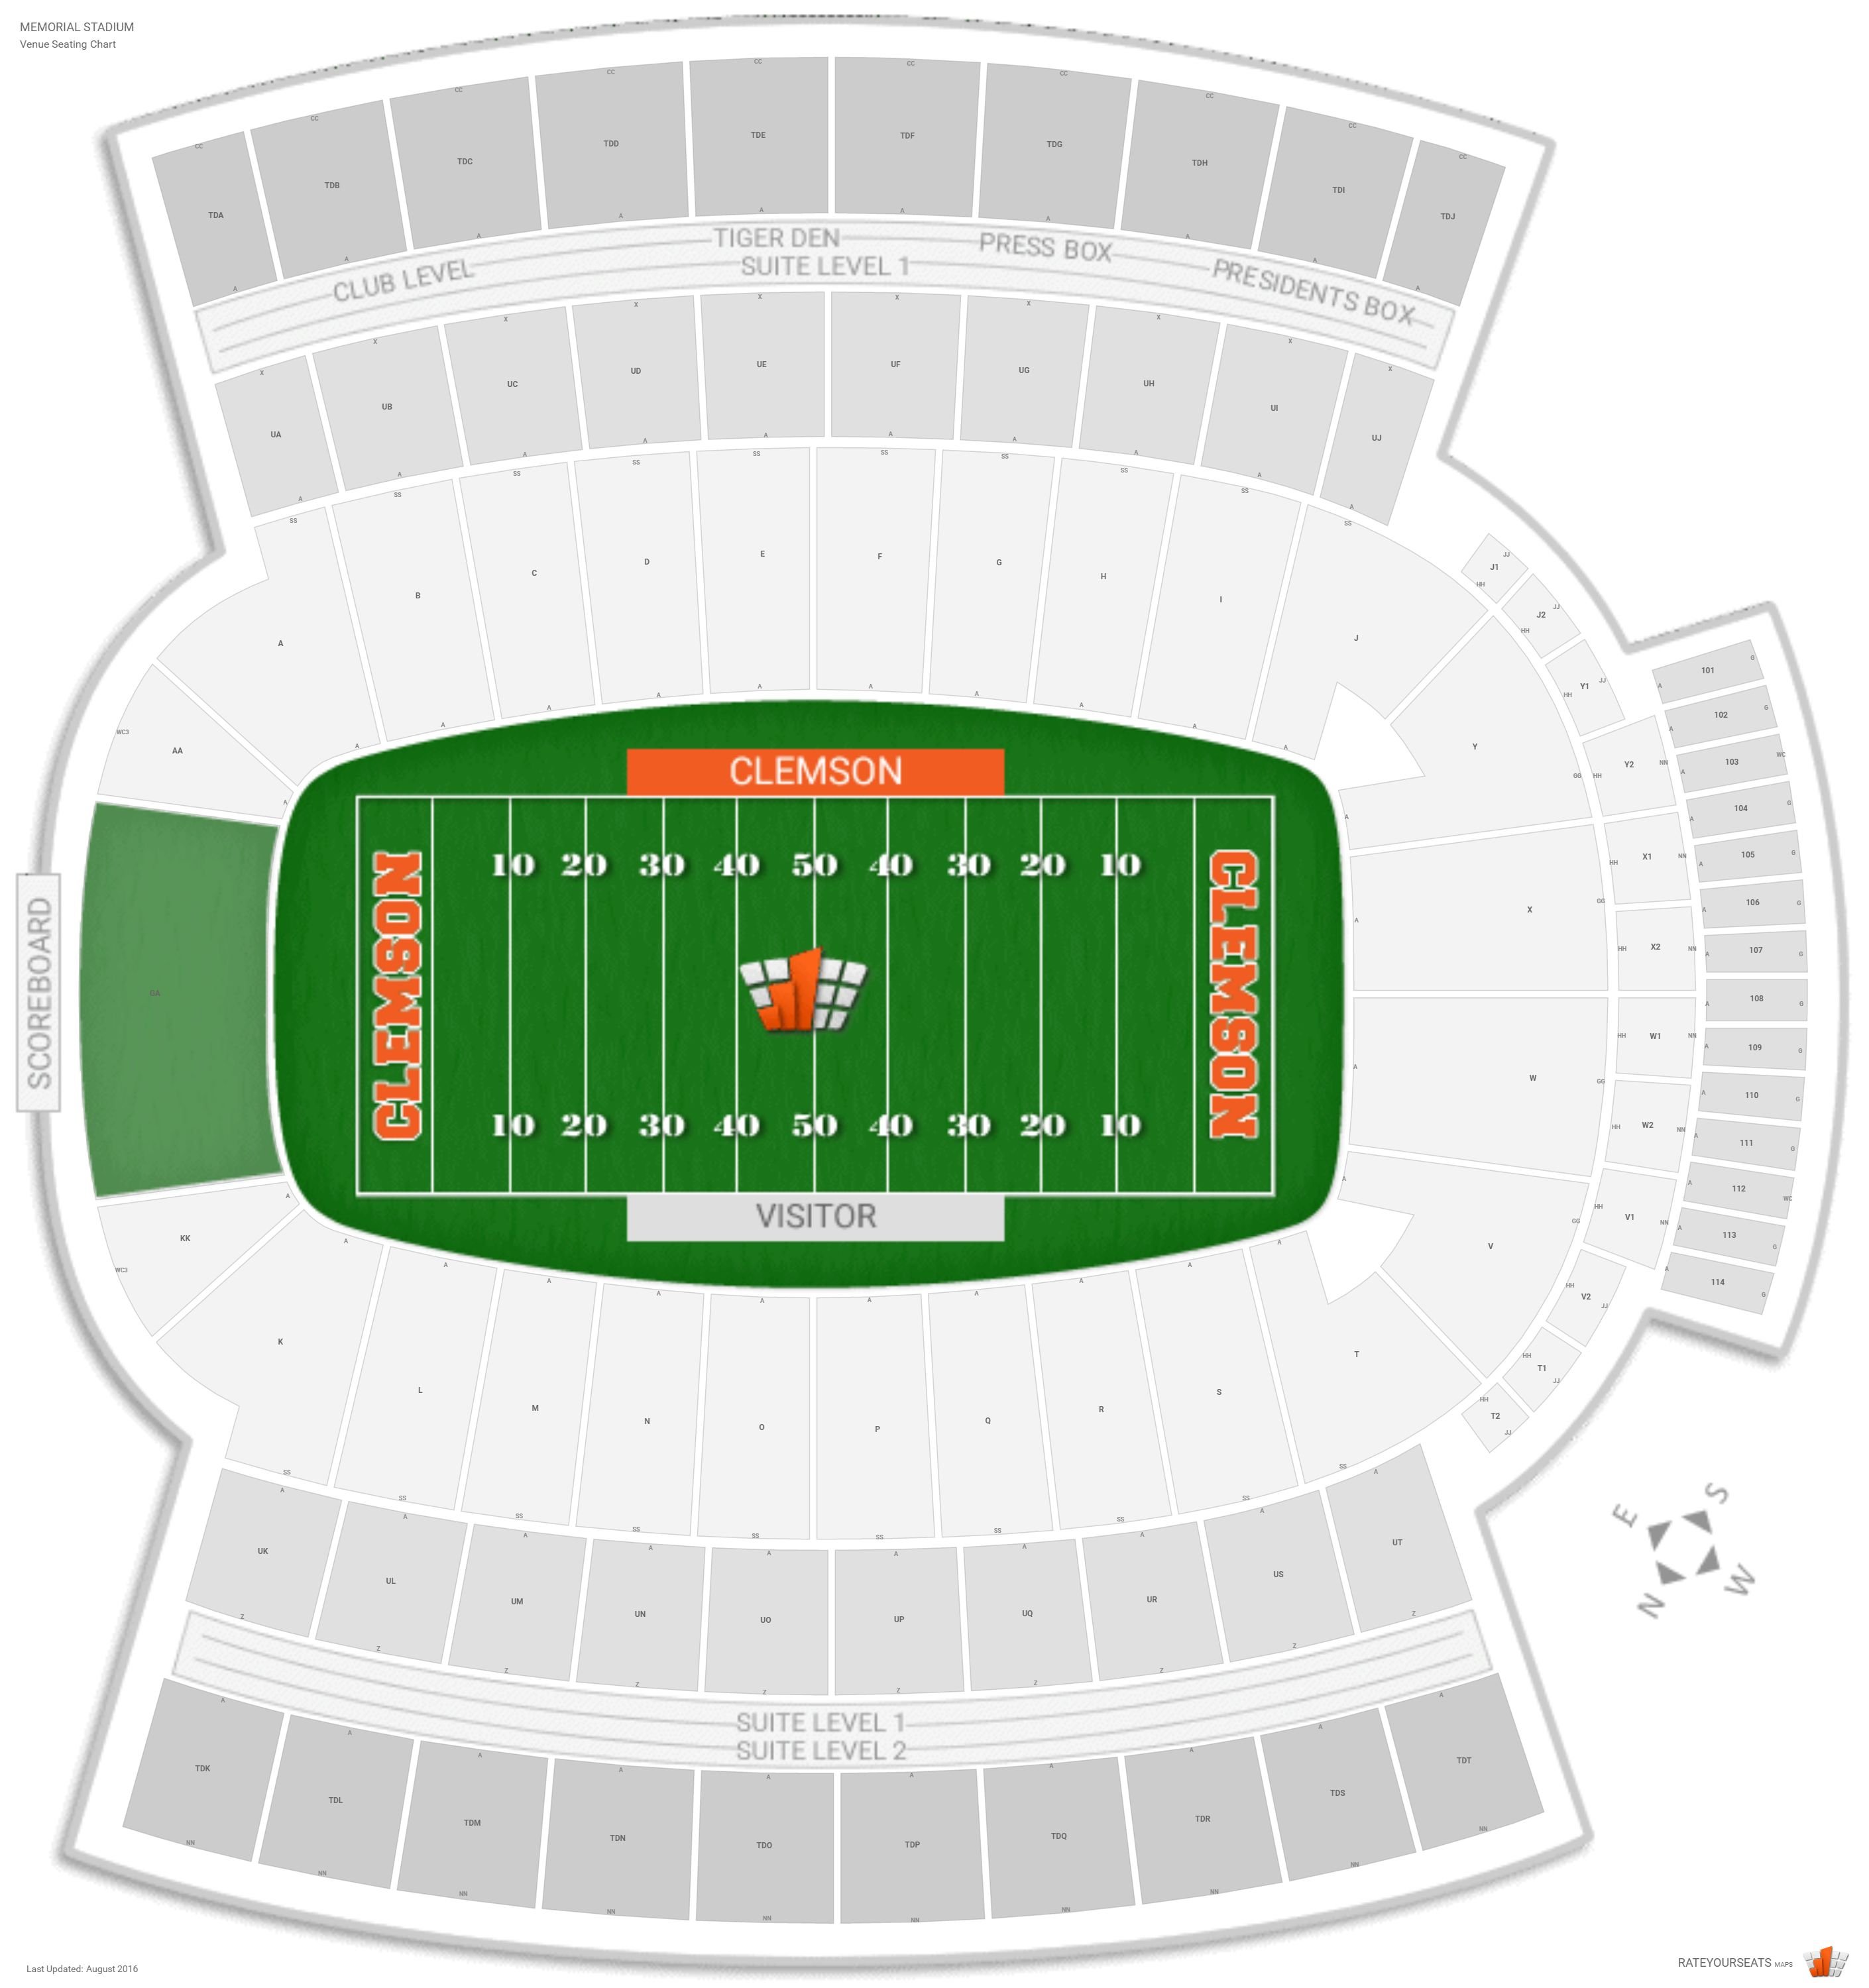 Clemson Football Stadium Interactive Seating Chart